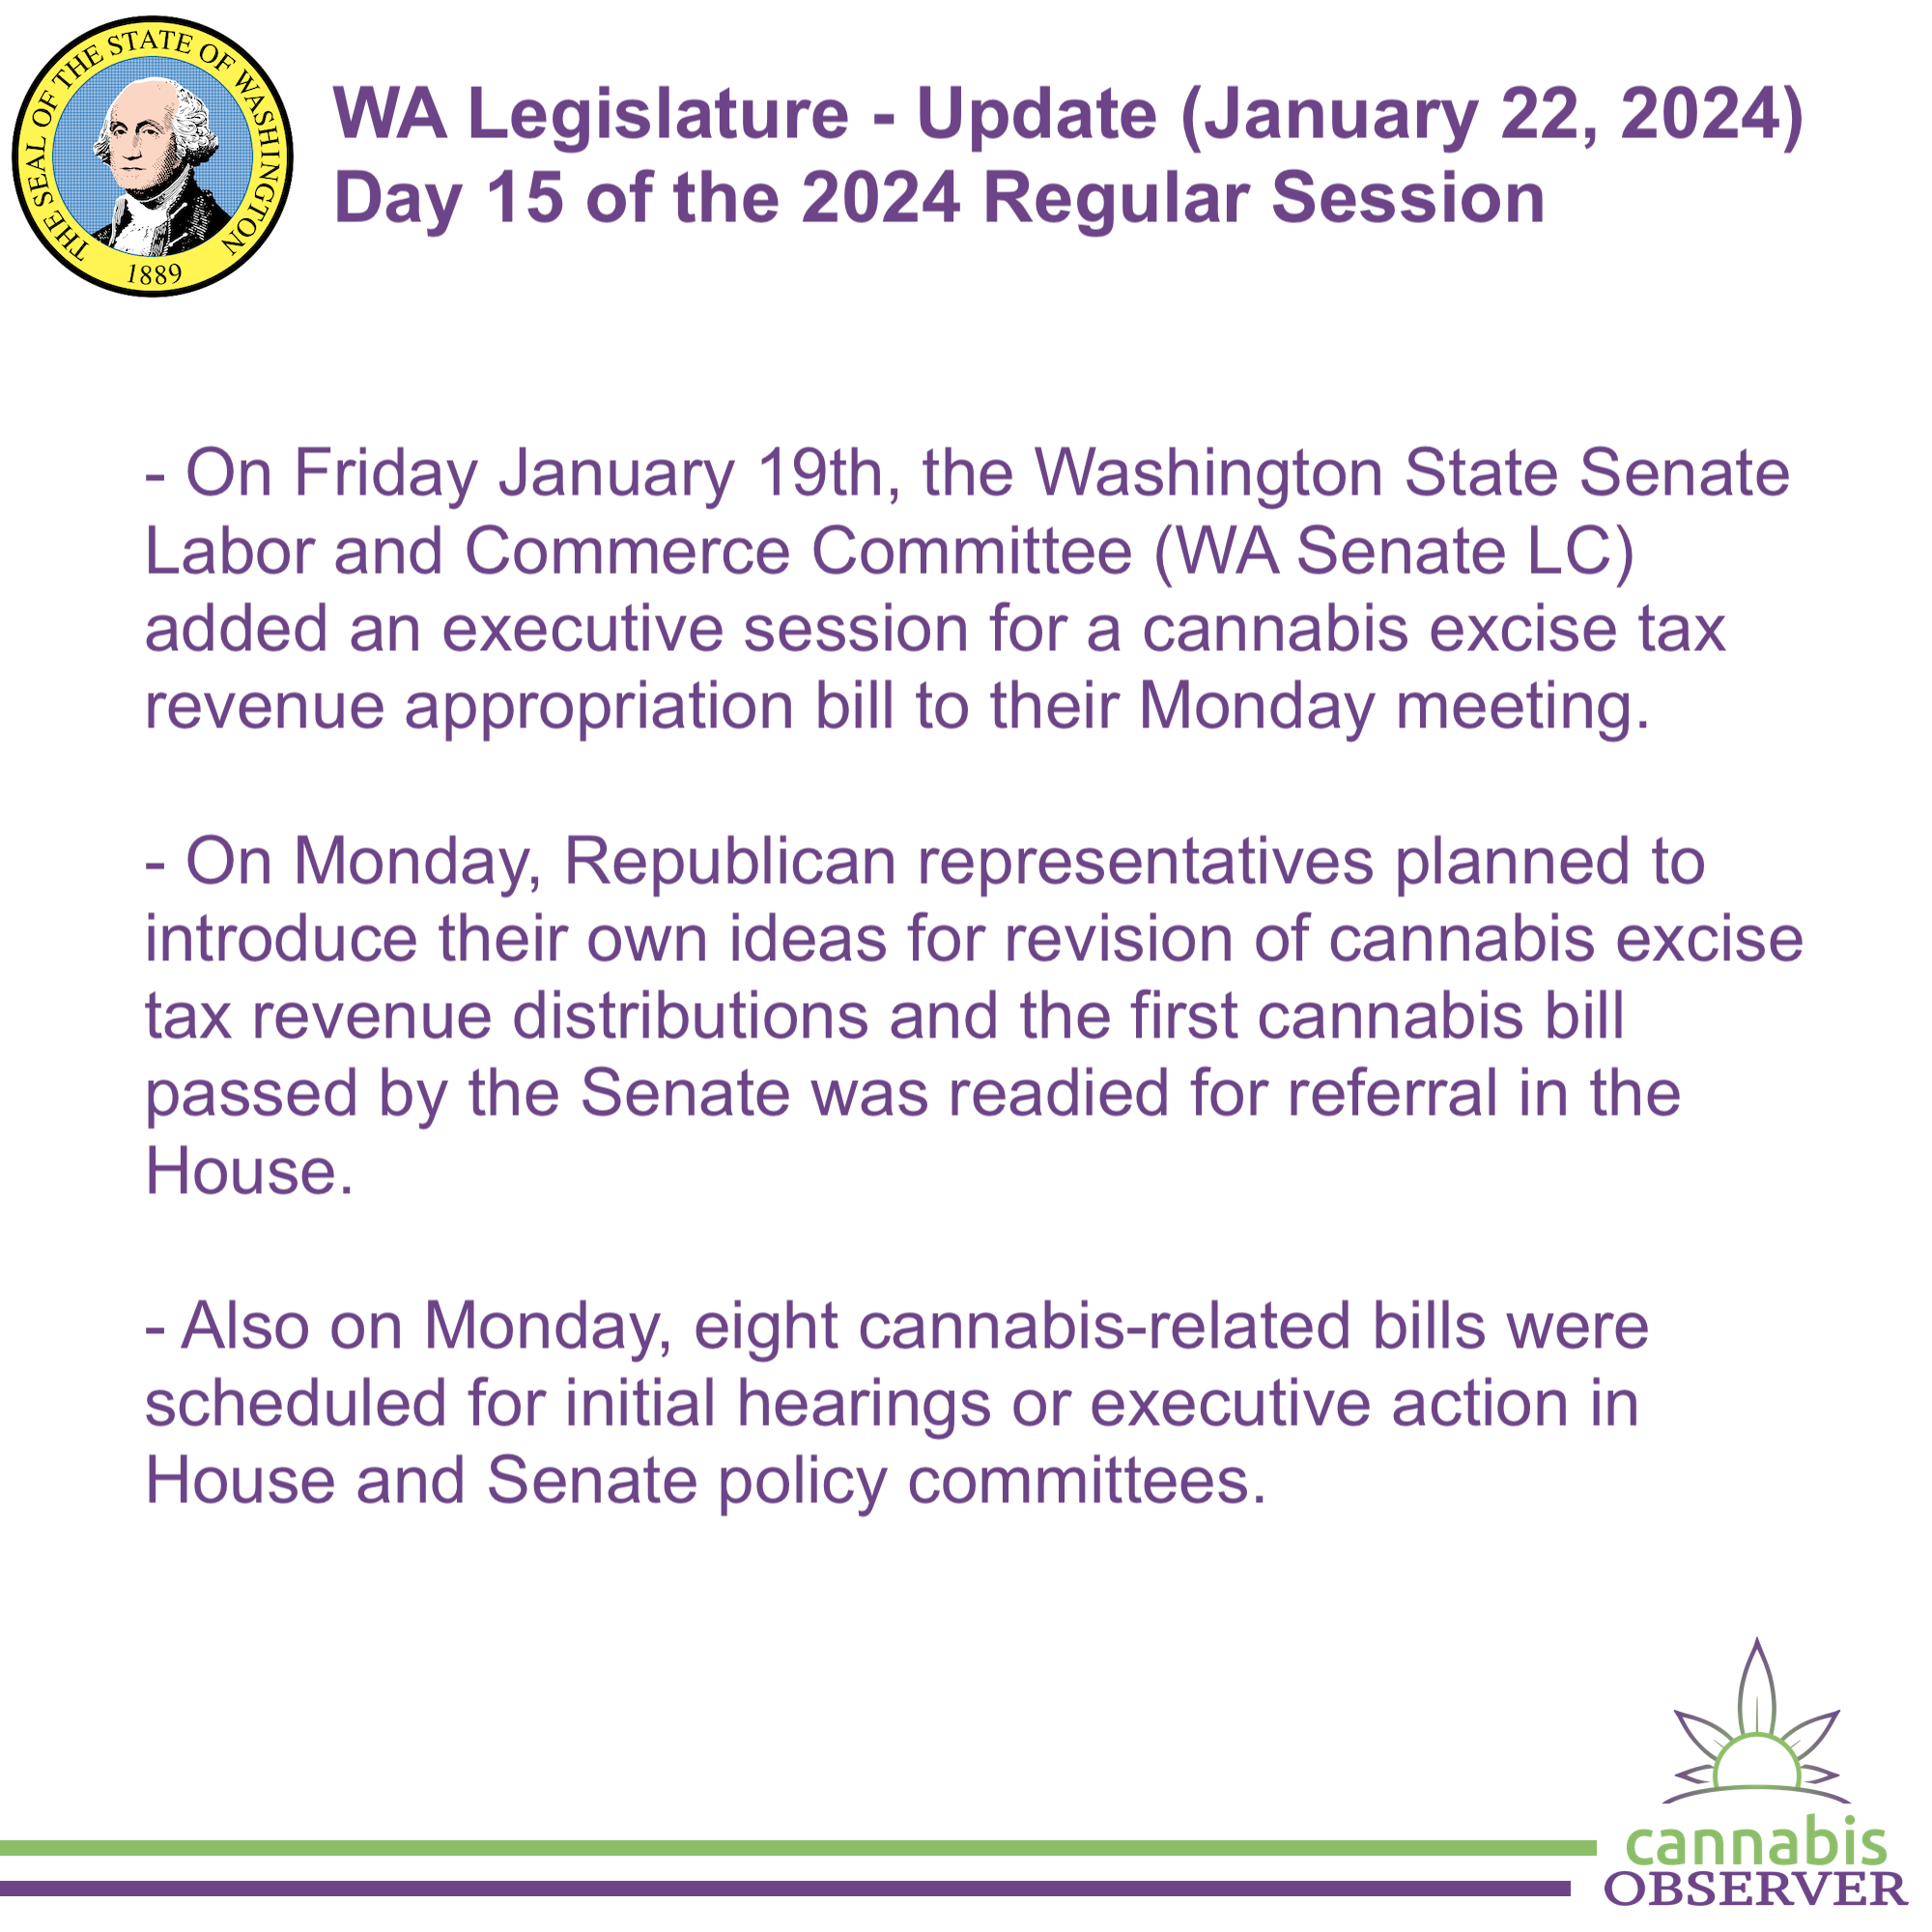 WA Legislature Update (January 22, 2024) Cannabis Observer